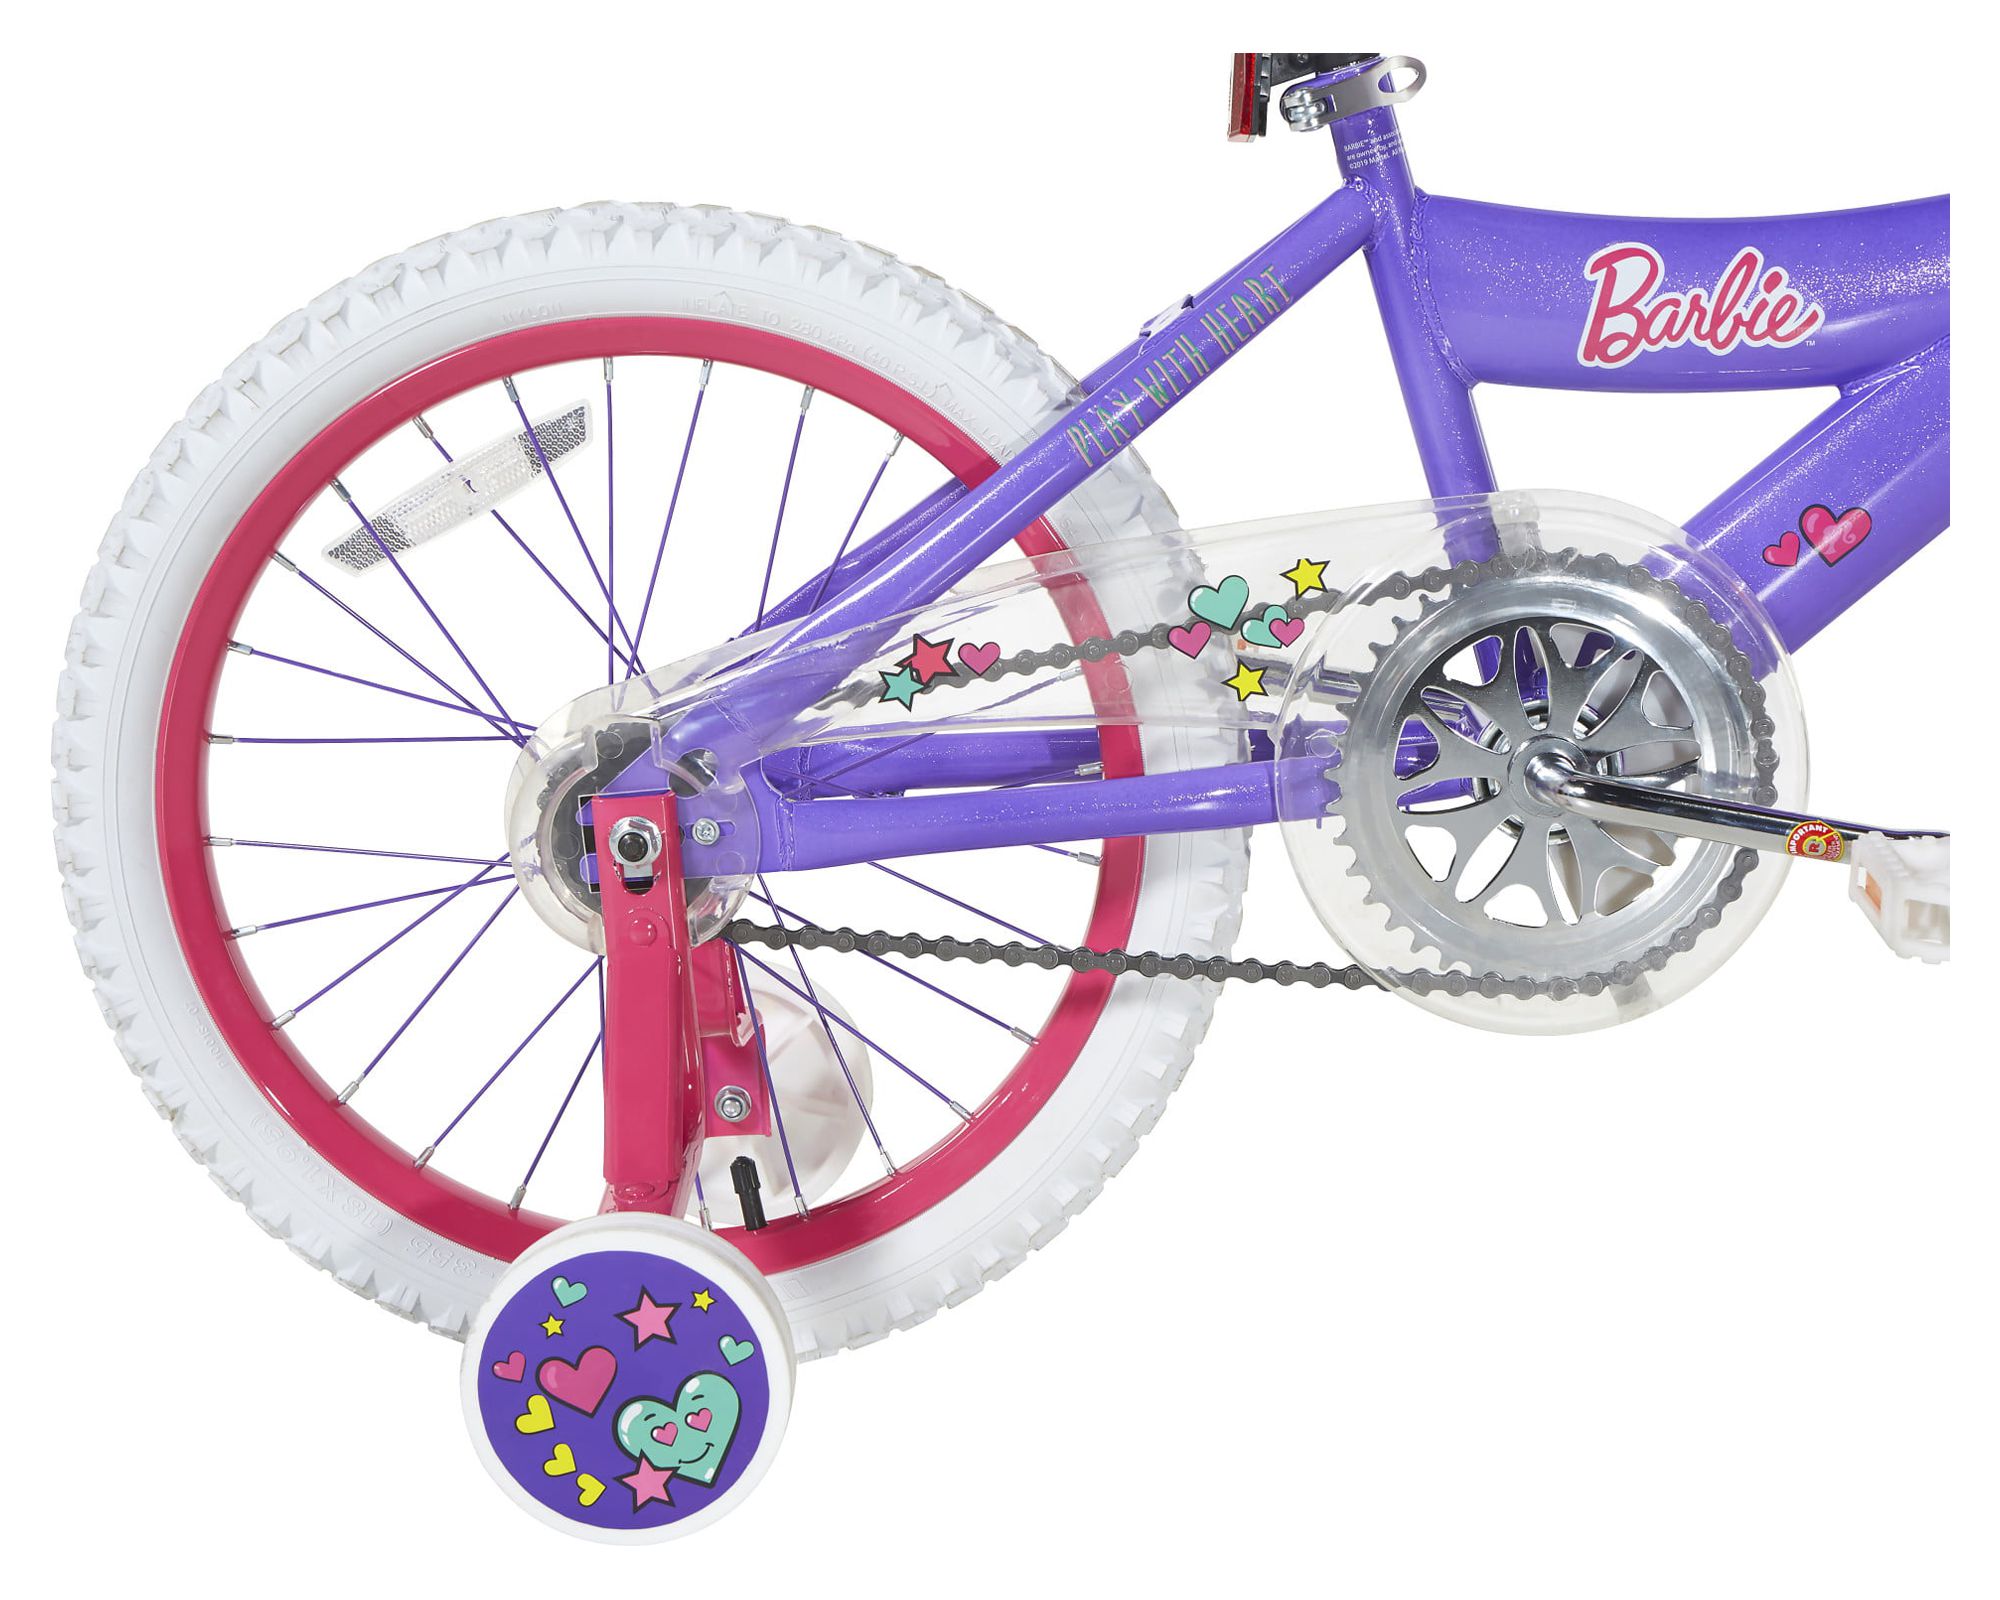 Dynacraft Barbie 18-Inch Girls BMX Bike For Age 6-9 Years - image 5 of 10